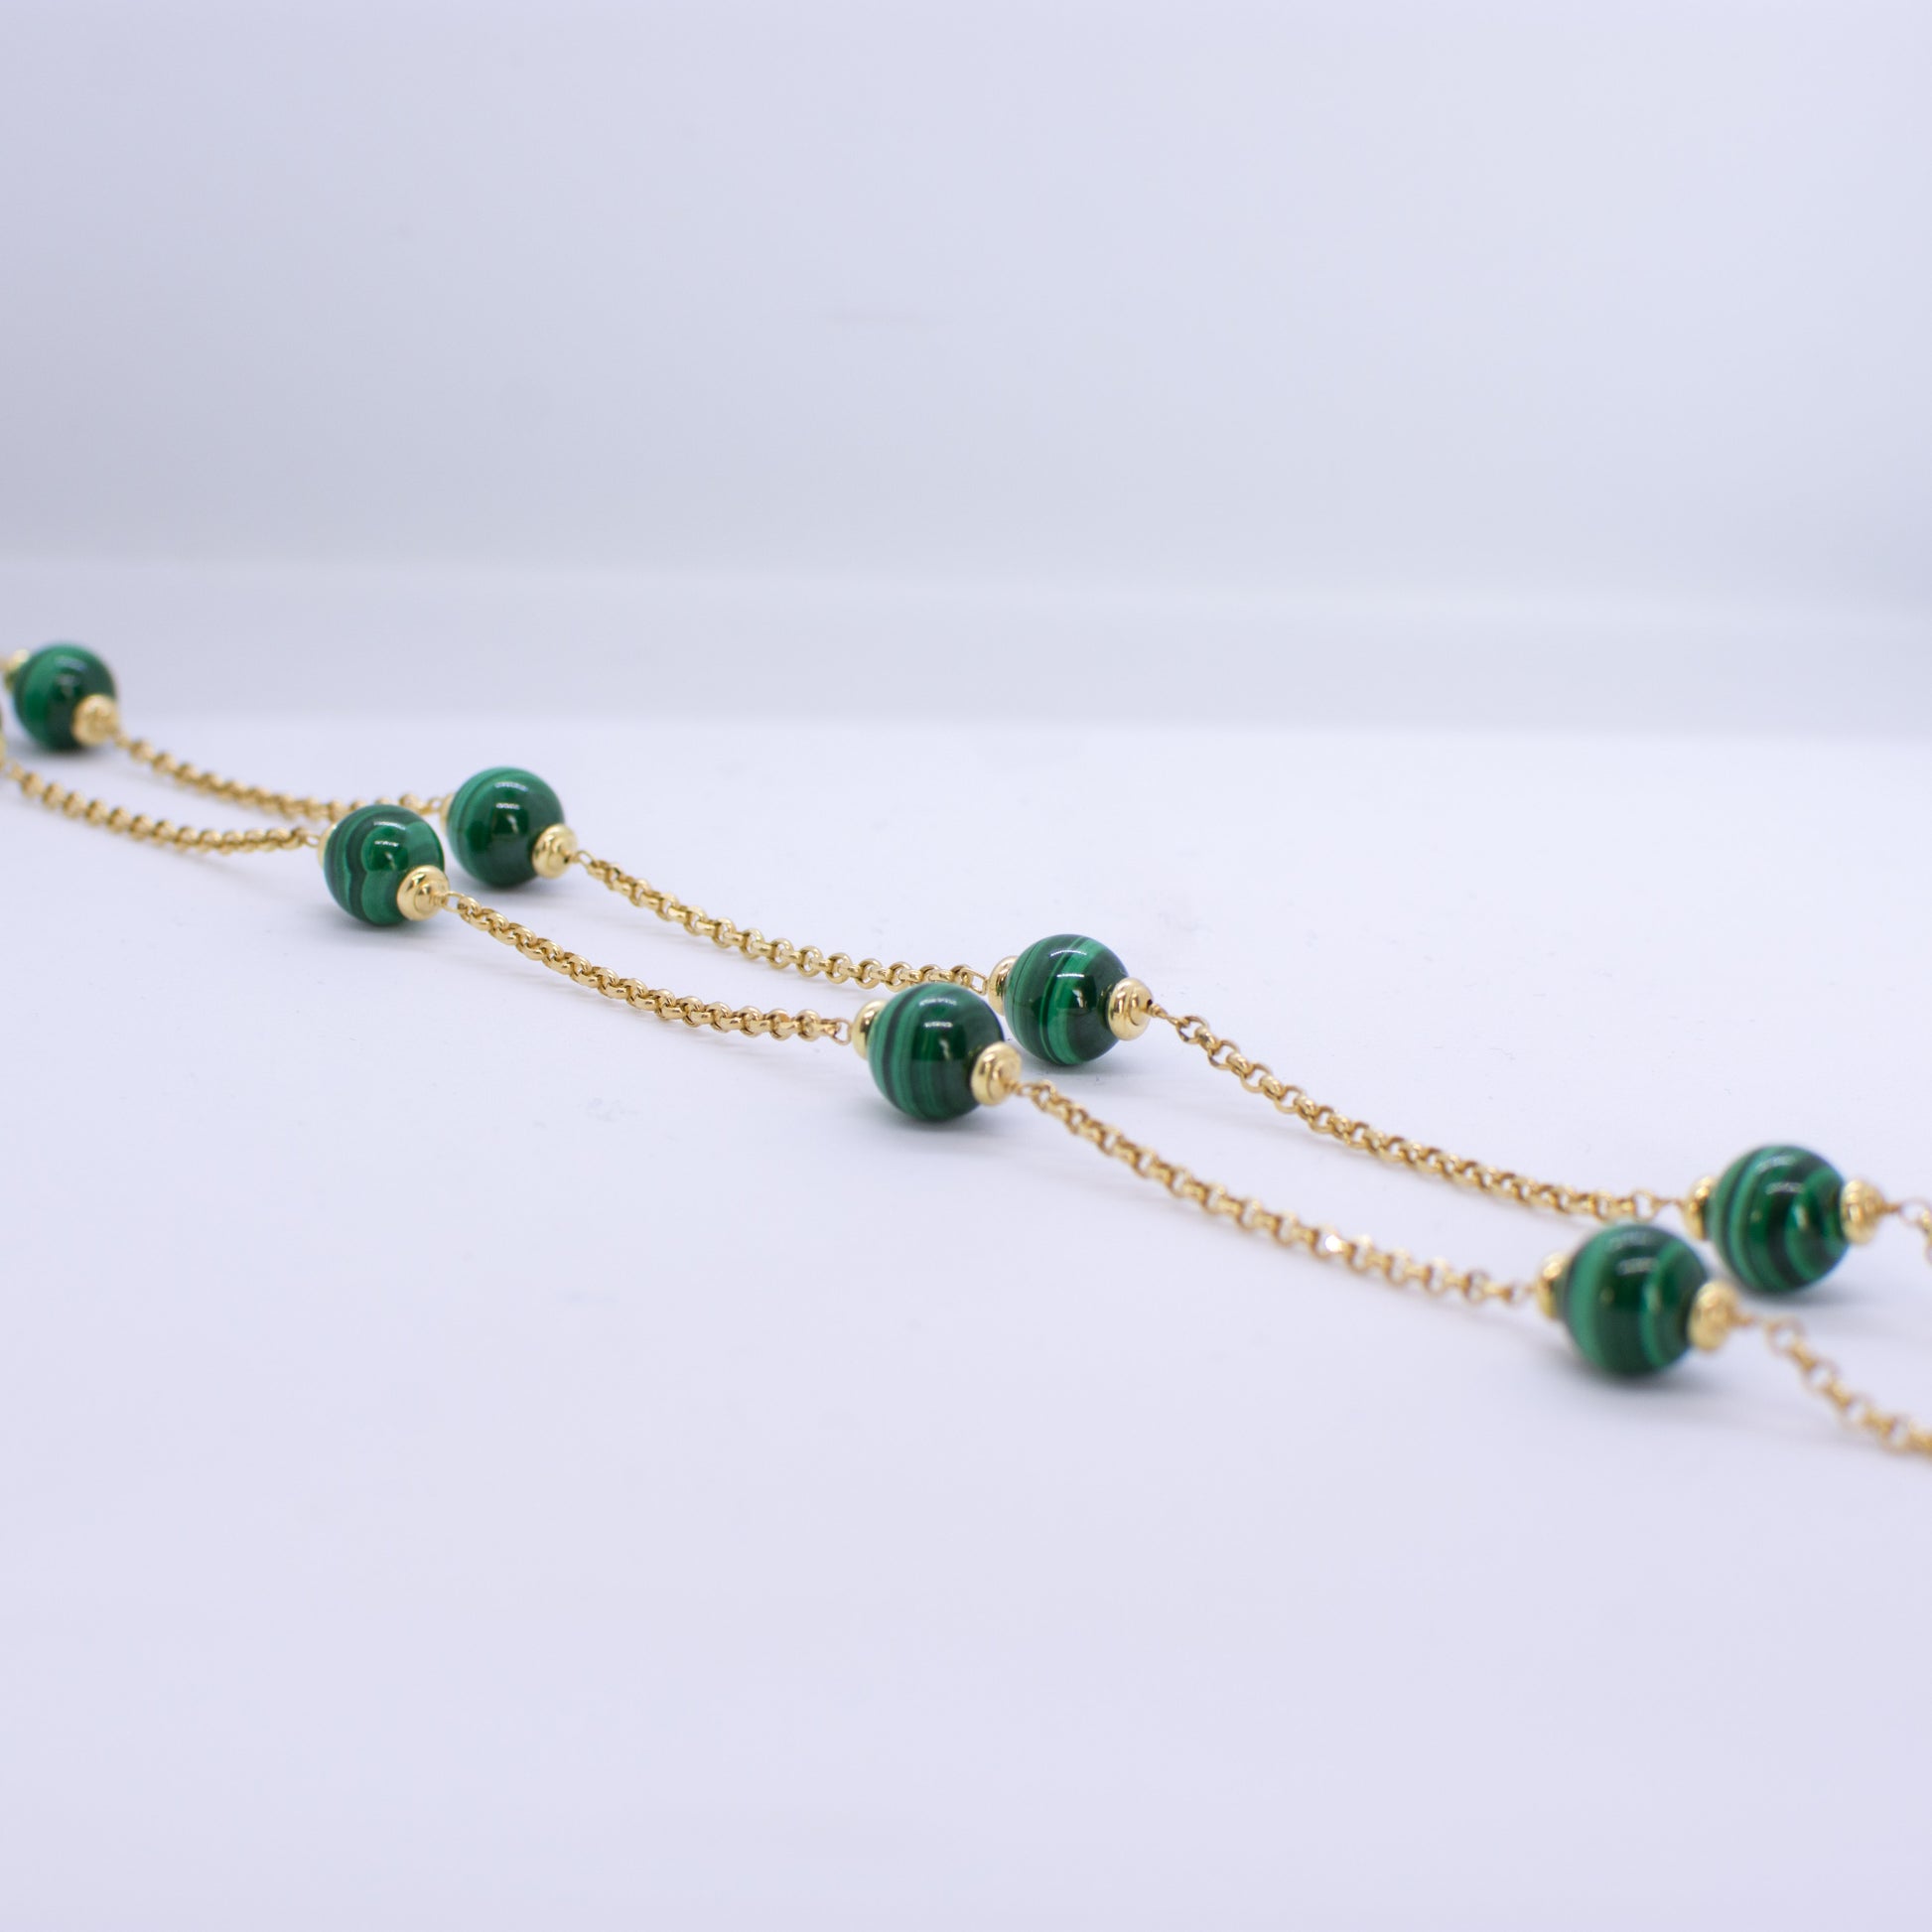 18ct Gold Malachite Bead and Chain Necklace 60cm long Malachite bead diameter: 10mm 18ct yellow gold